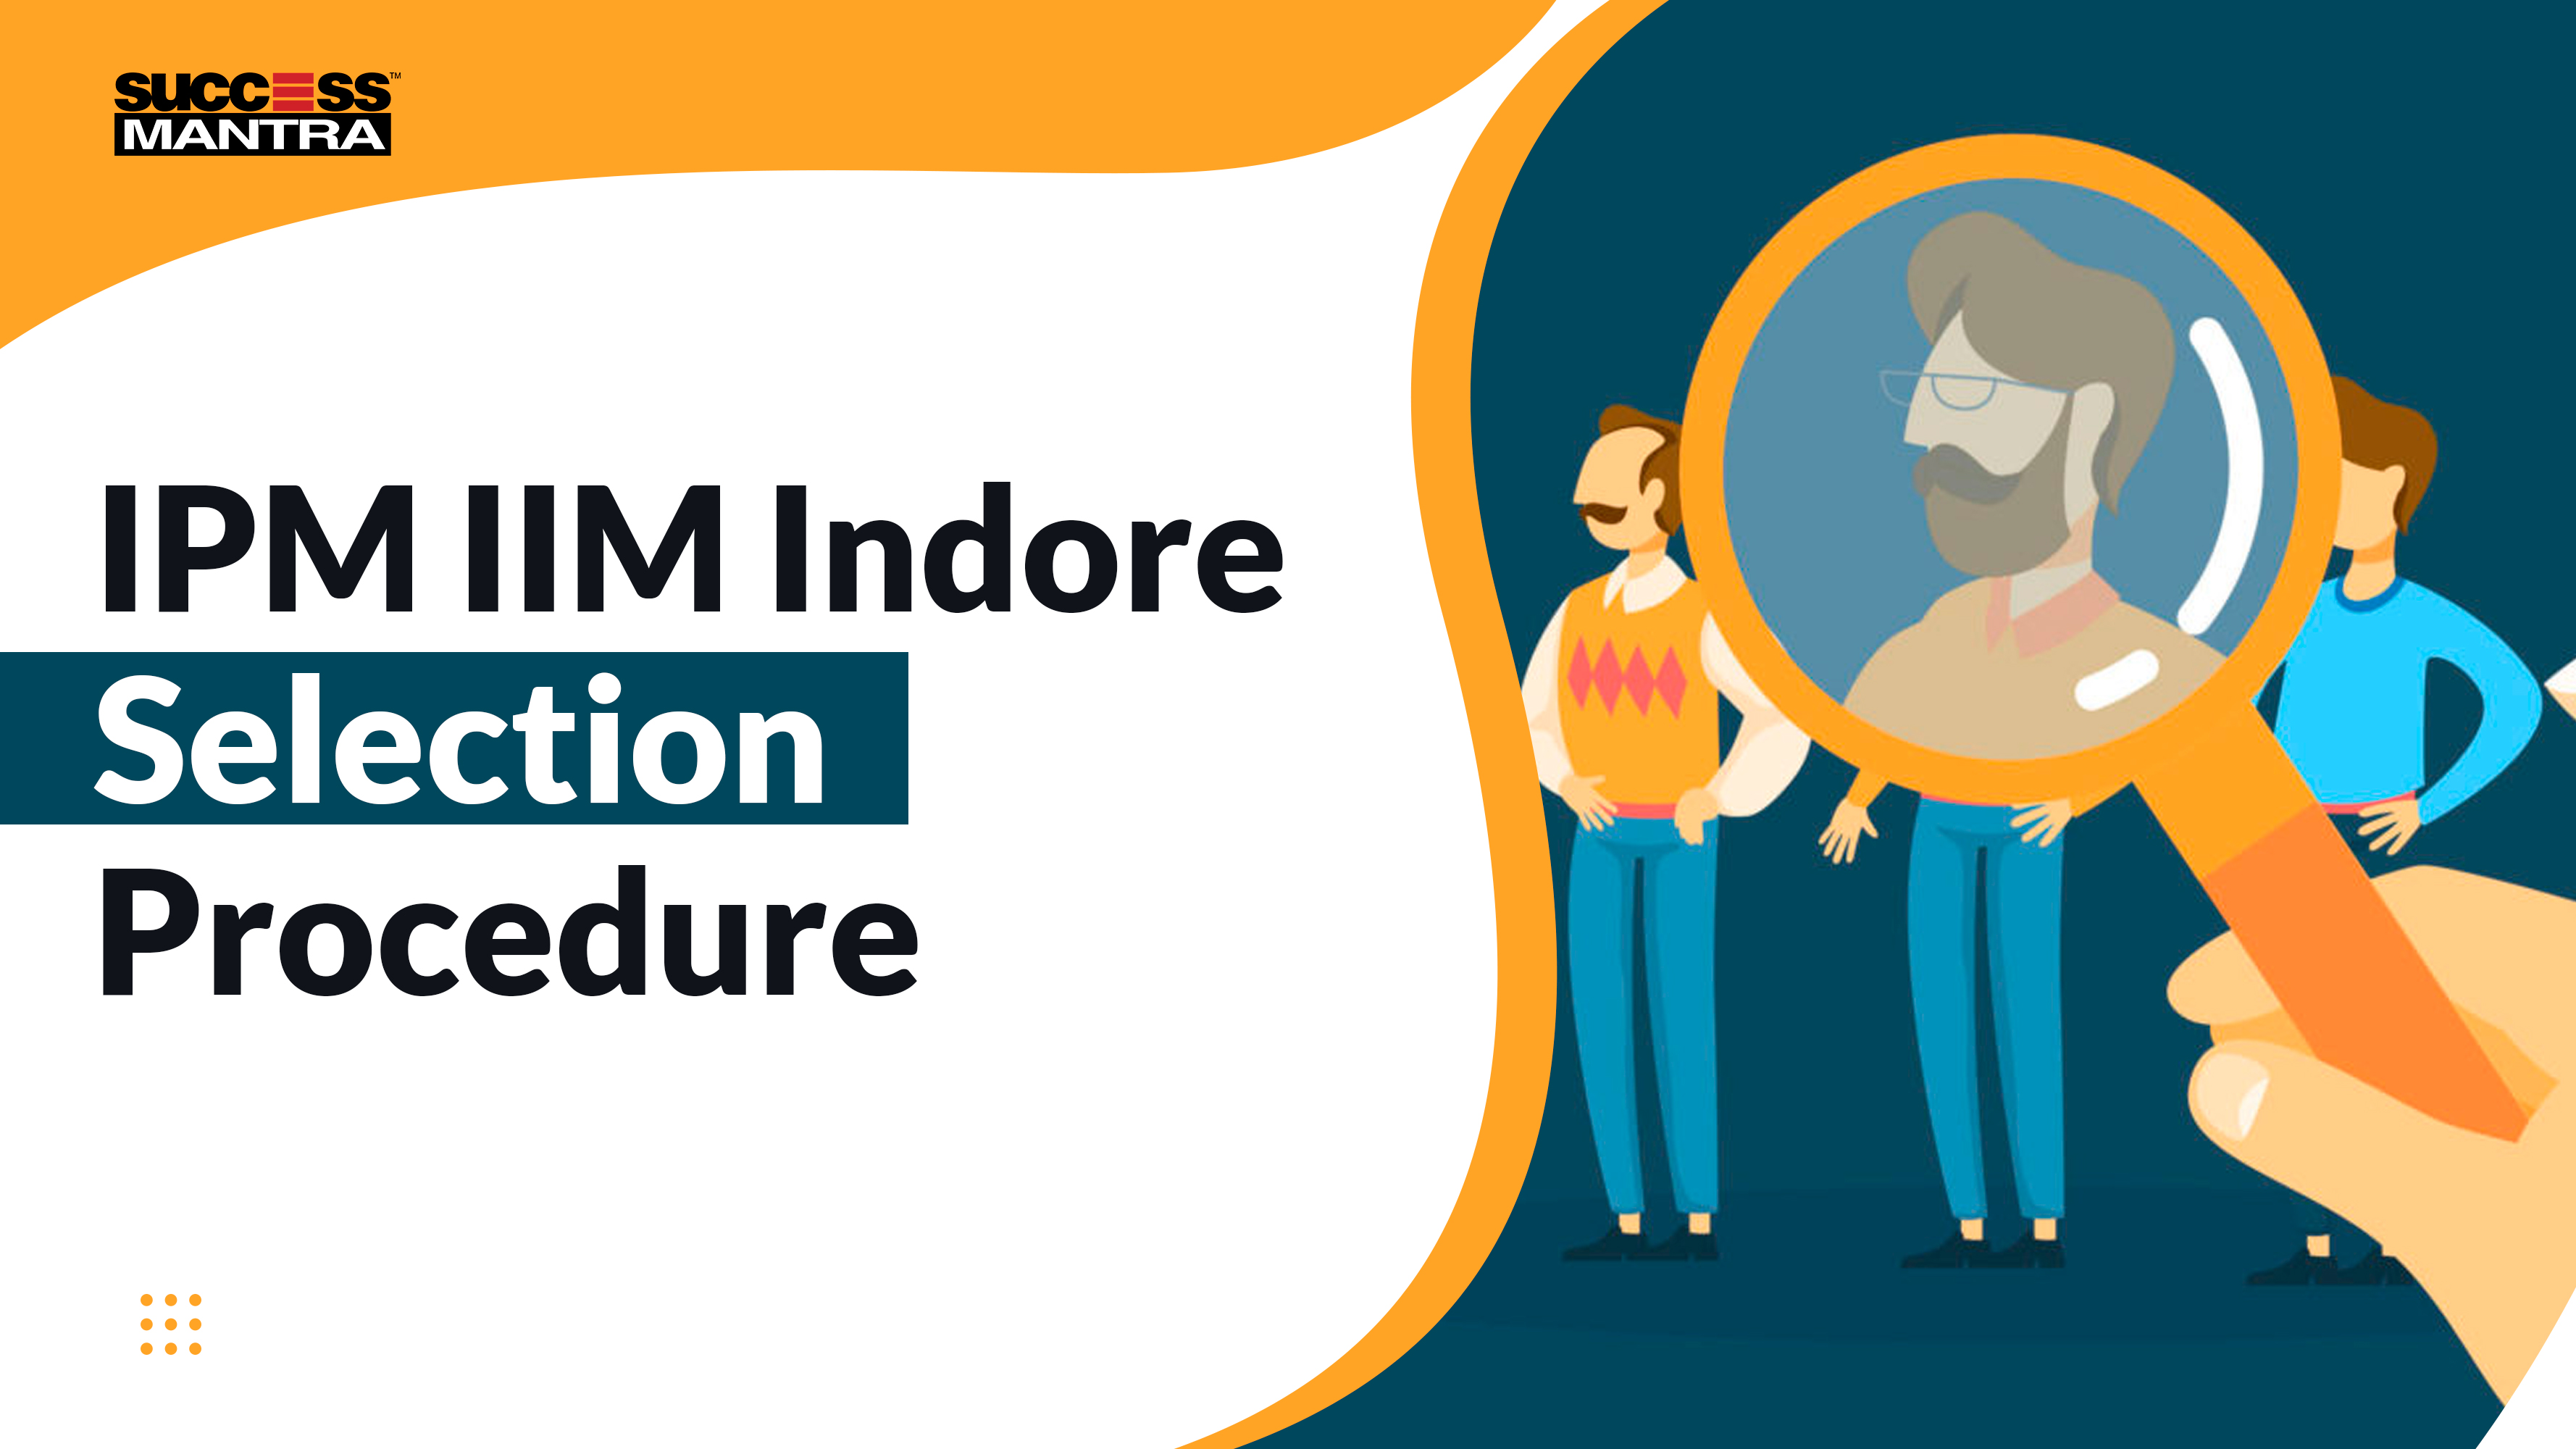 IPM IIM Indore Selection Procedure, Success Mantra Coaching Institute, Best Coaching Institute For BBA Located In GTB Nagar Delhi 